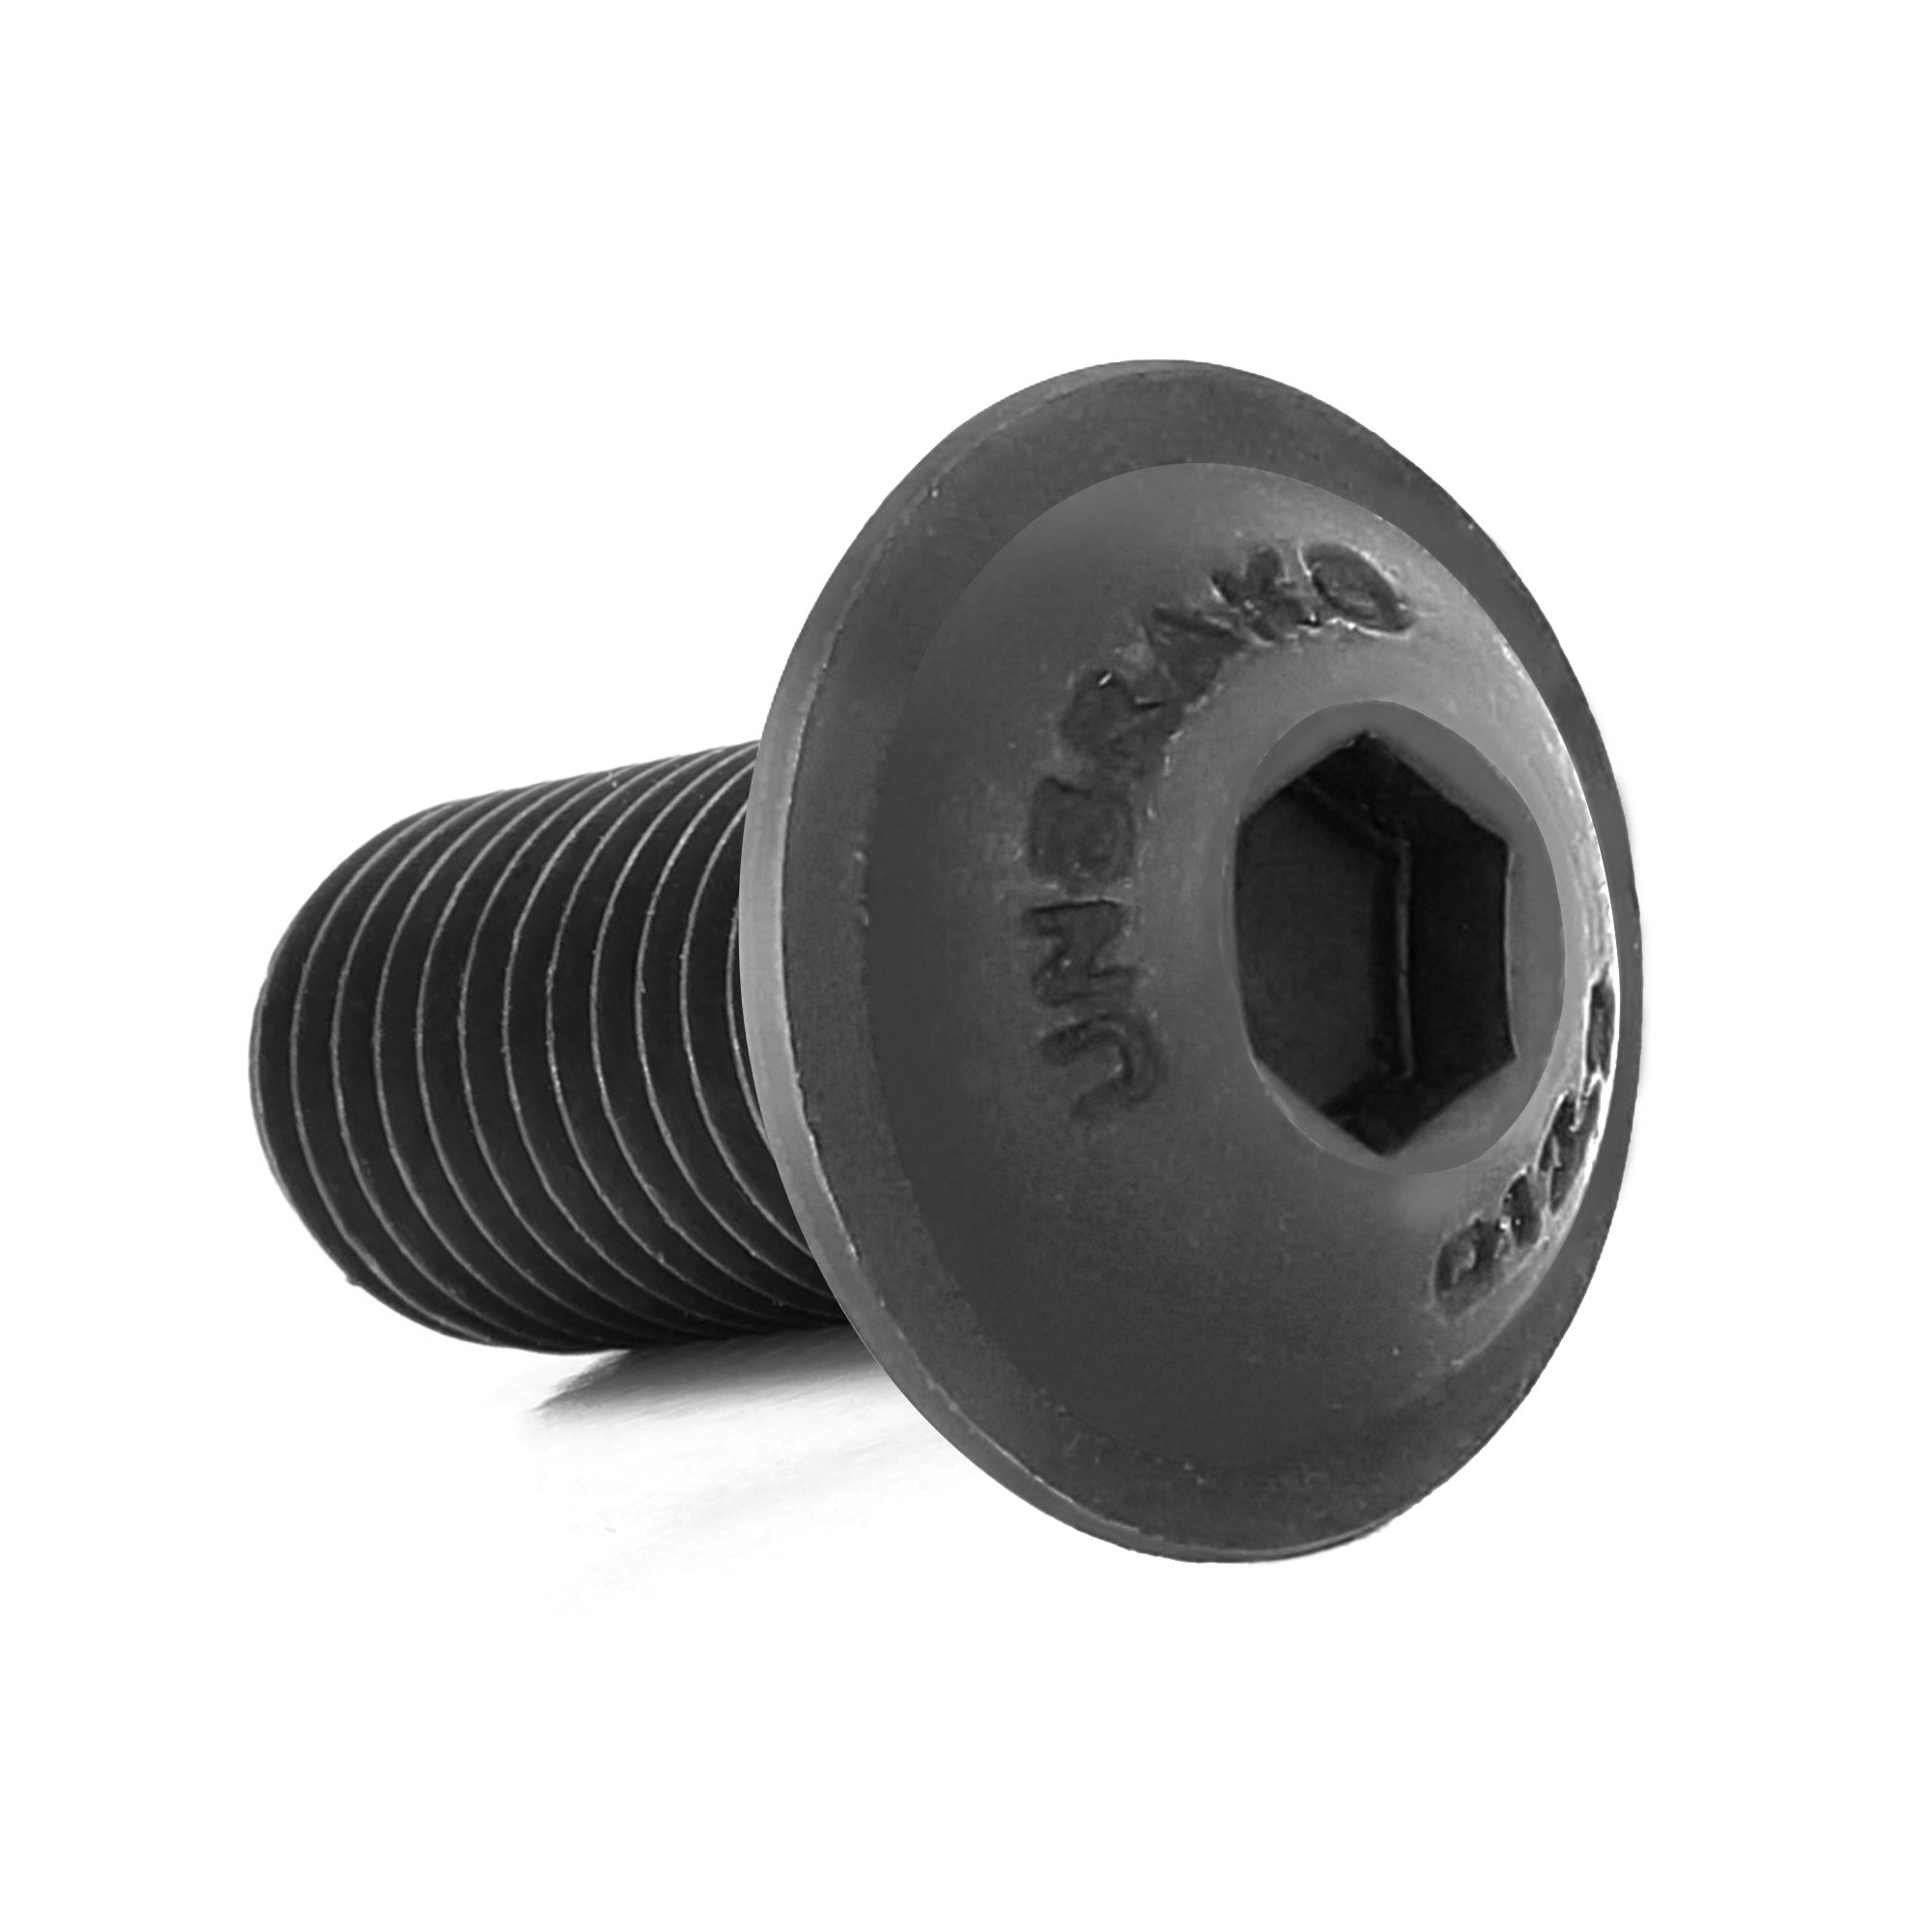 M6-1x12 ISO 7380 Alloy Steel Flange Button Hd Socket Cap Screw Full Thrd Black Oxide (Unbrako)